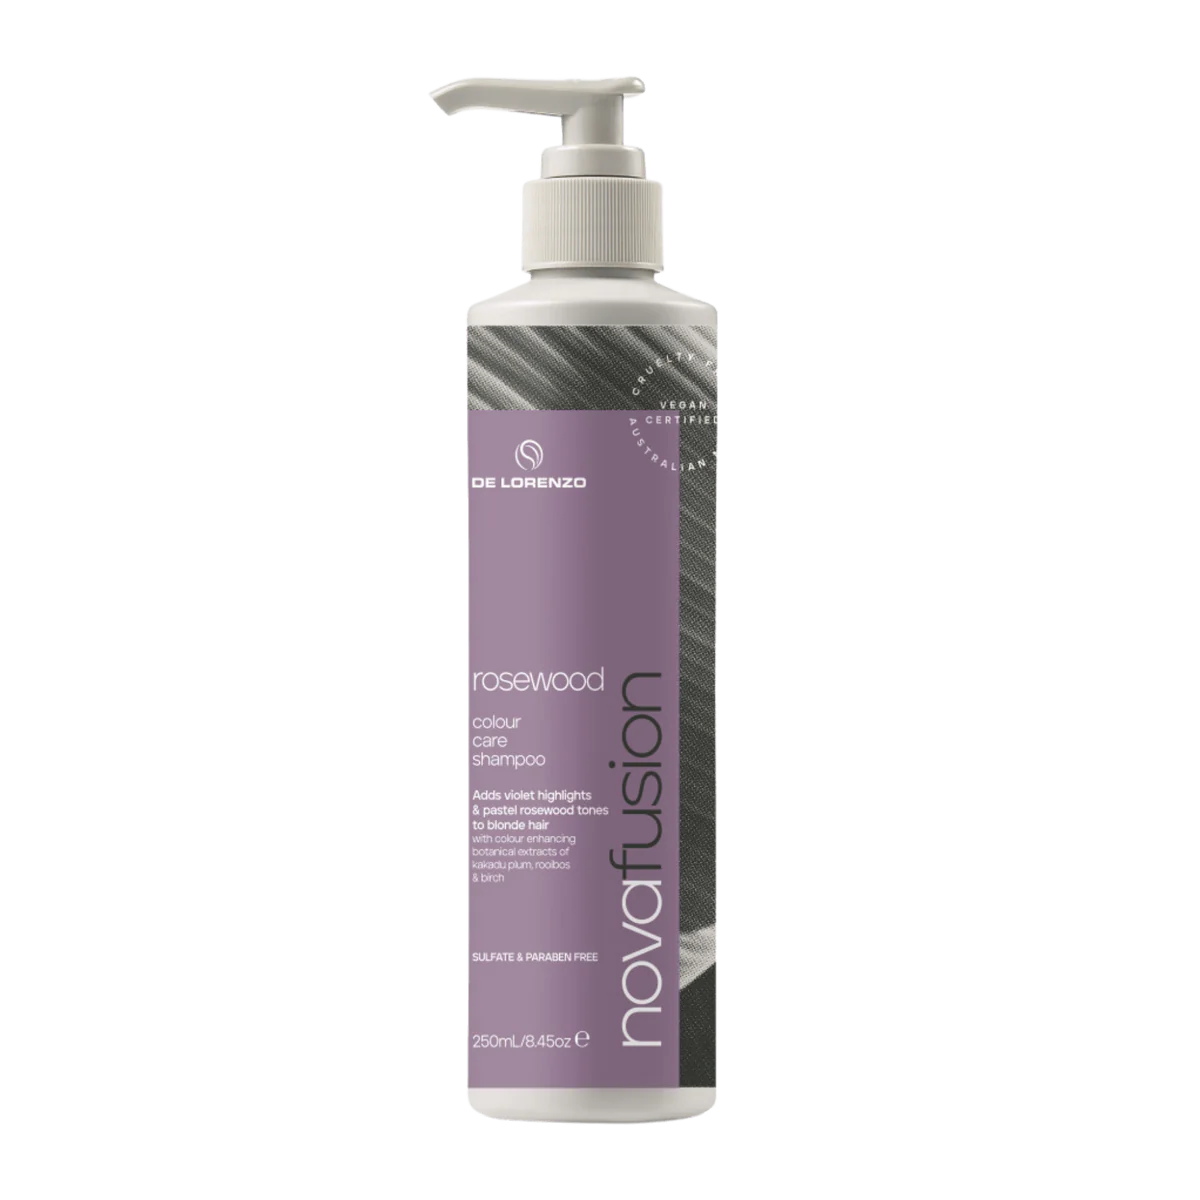 DE LORENZO Nova fusion Rosewood Colour Shampoo 250ml